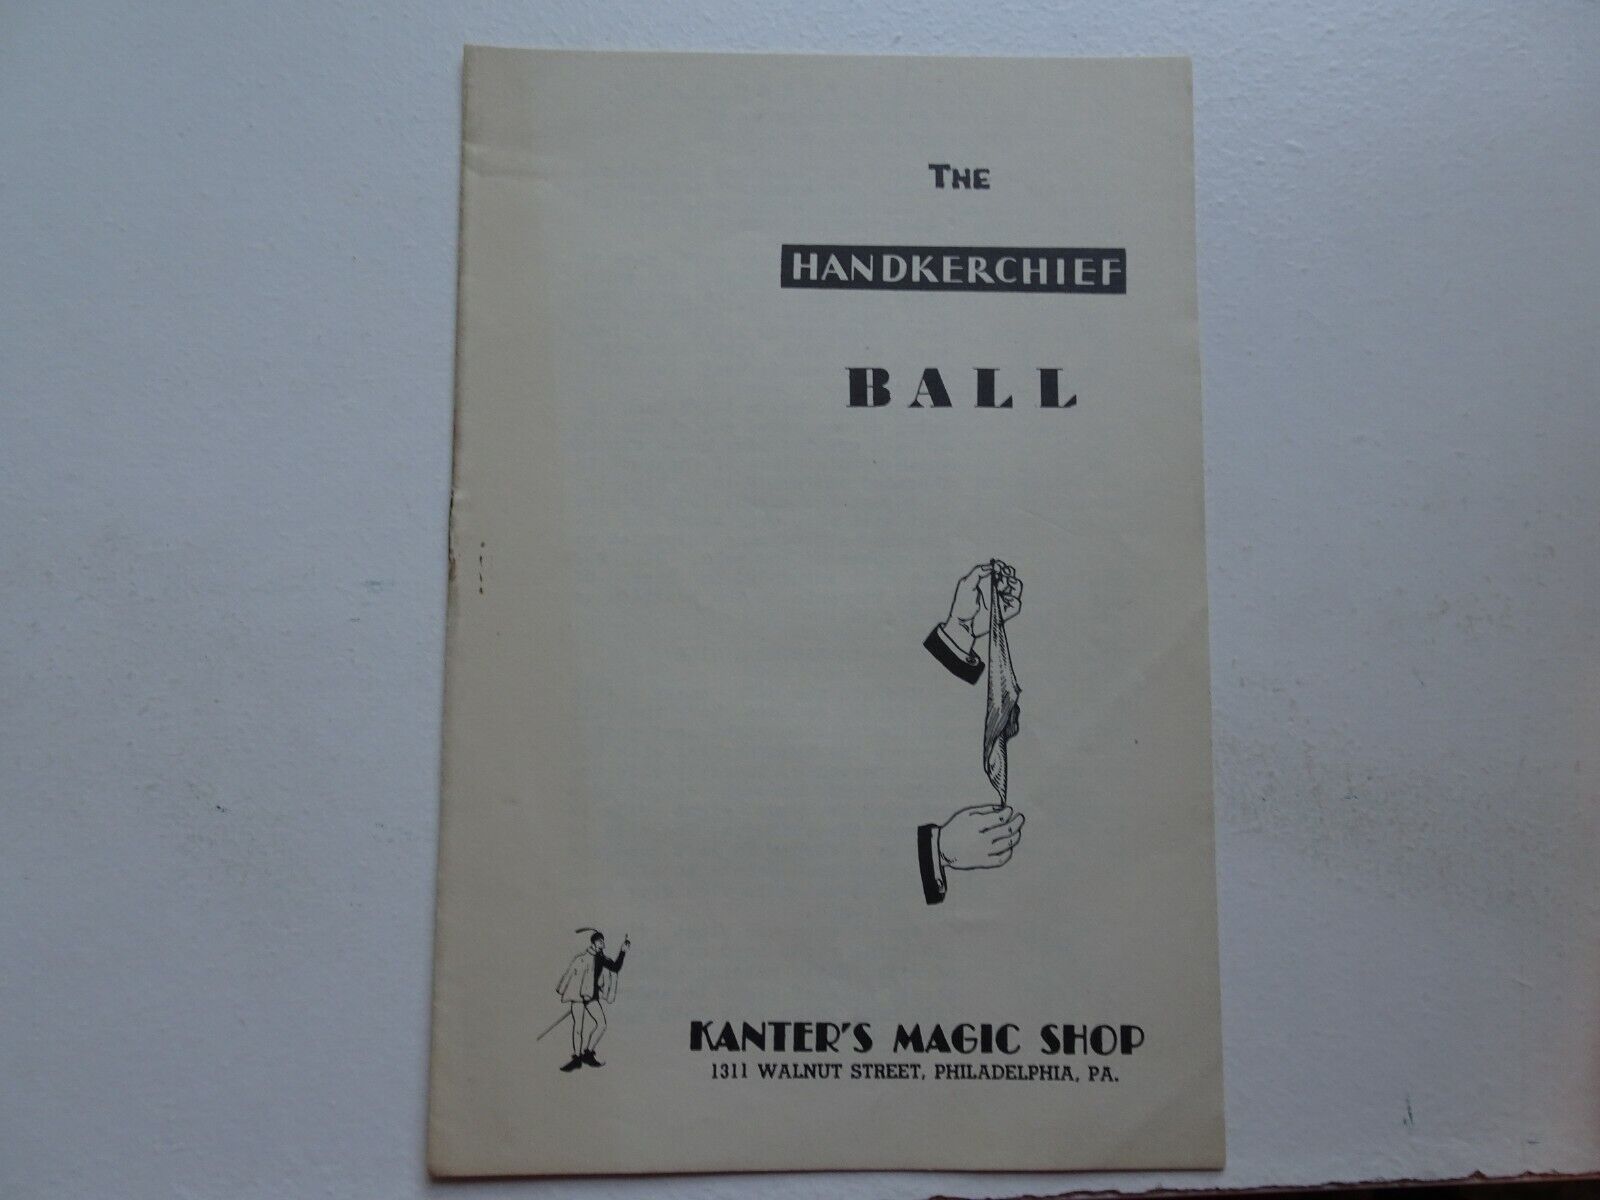 Handkerchief Ball By Kanter's Magic Shop Copyright 1943 By M. Kanter